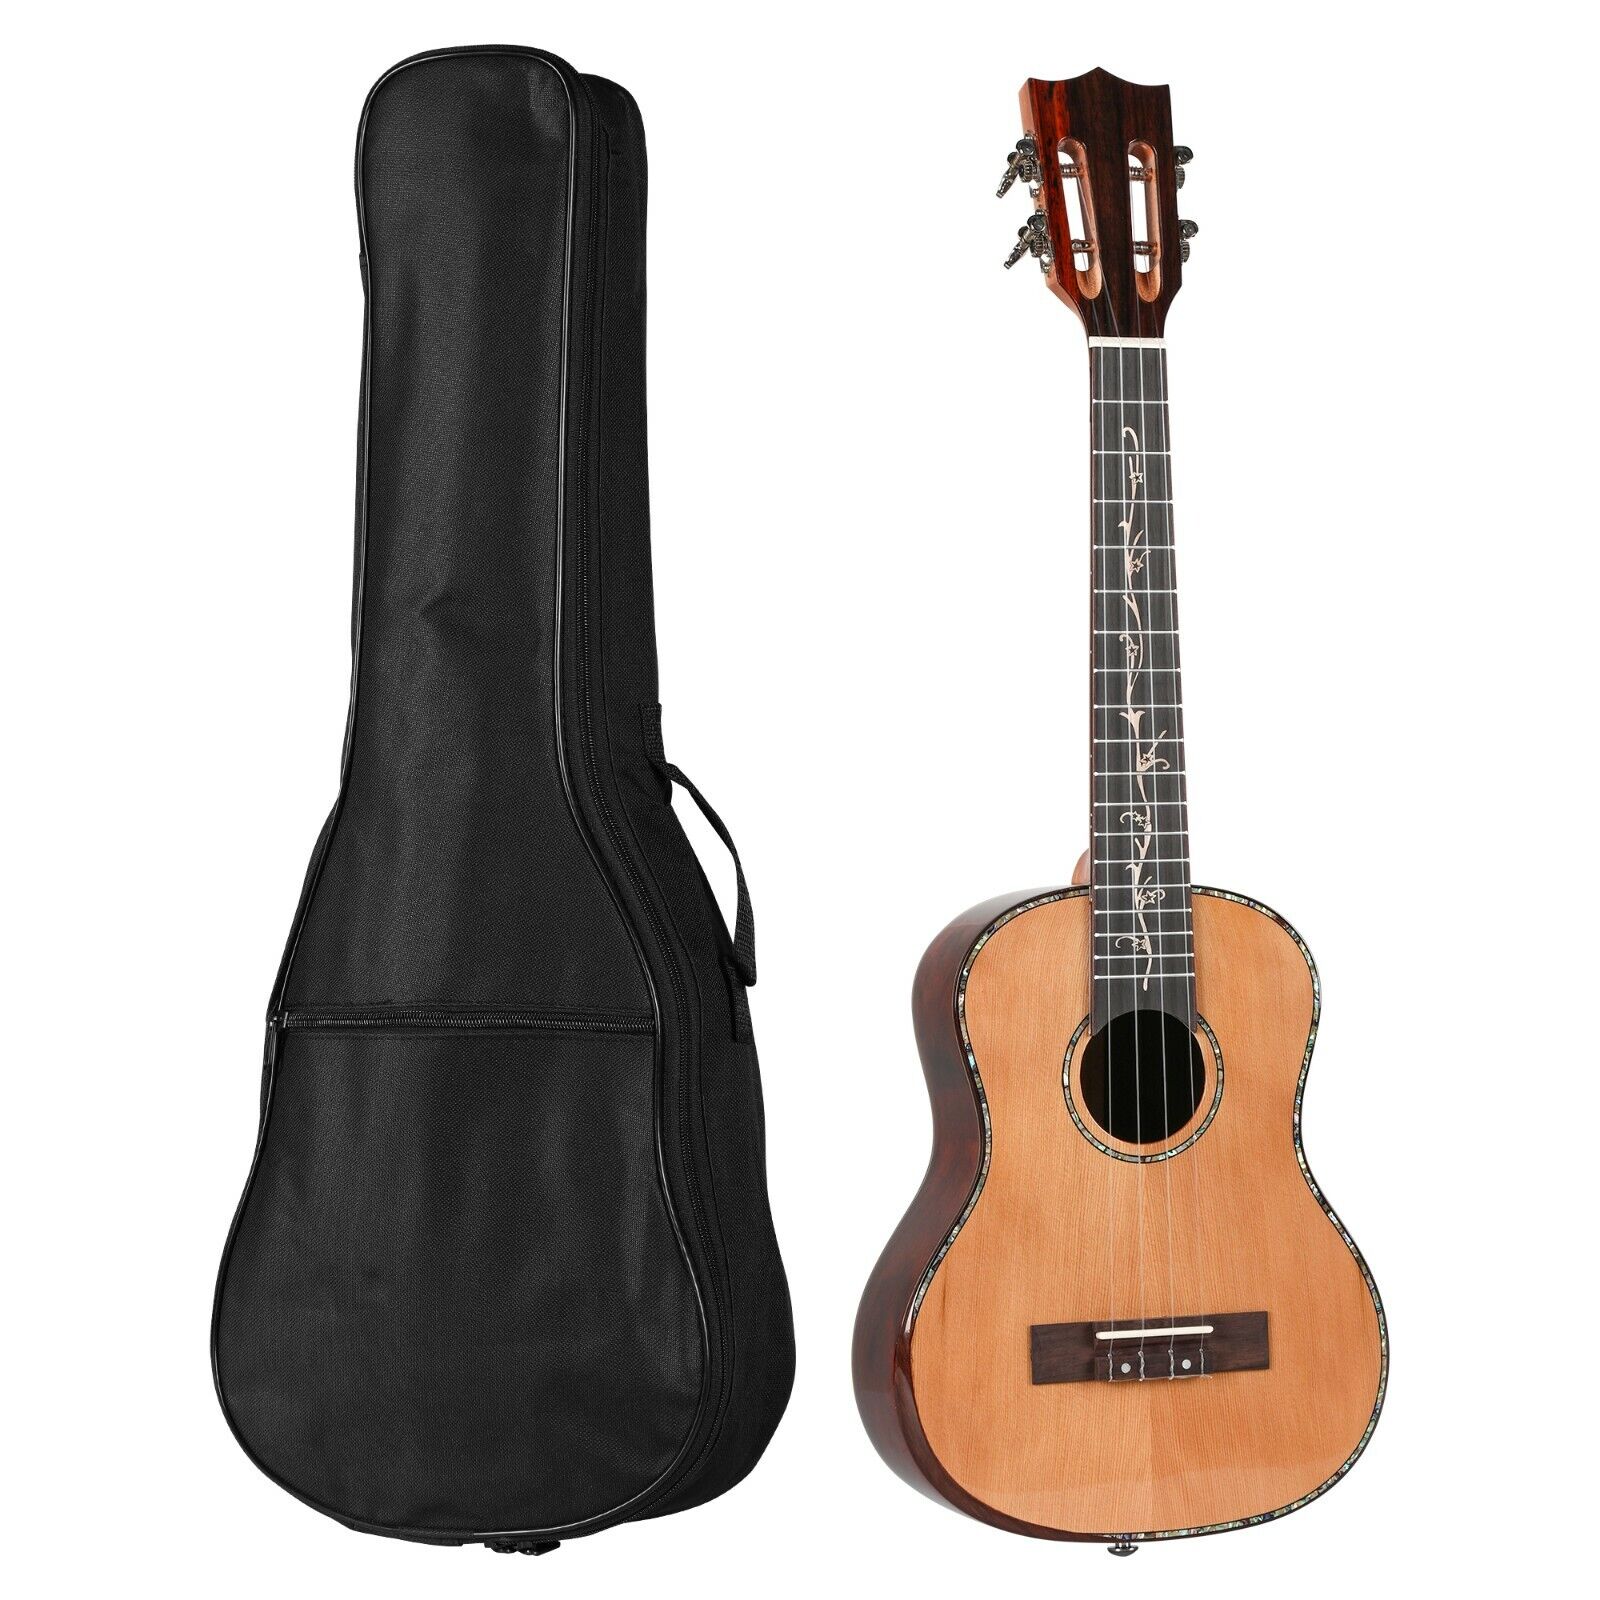 All solid wood 26 inch tenor ukulele ukelele uke guitar with sponge bag 1